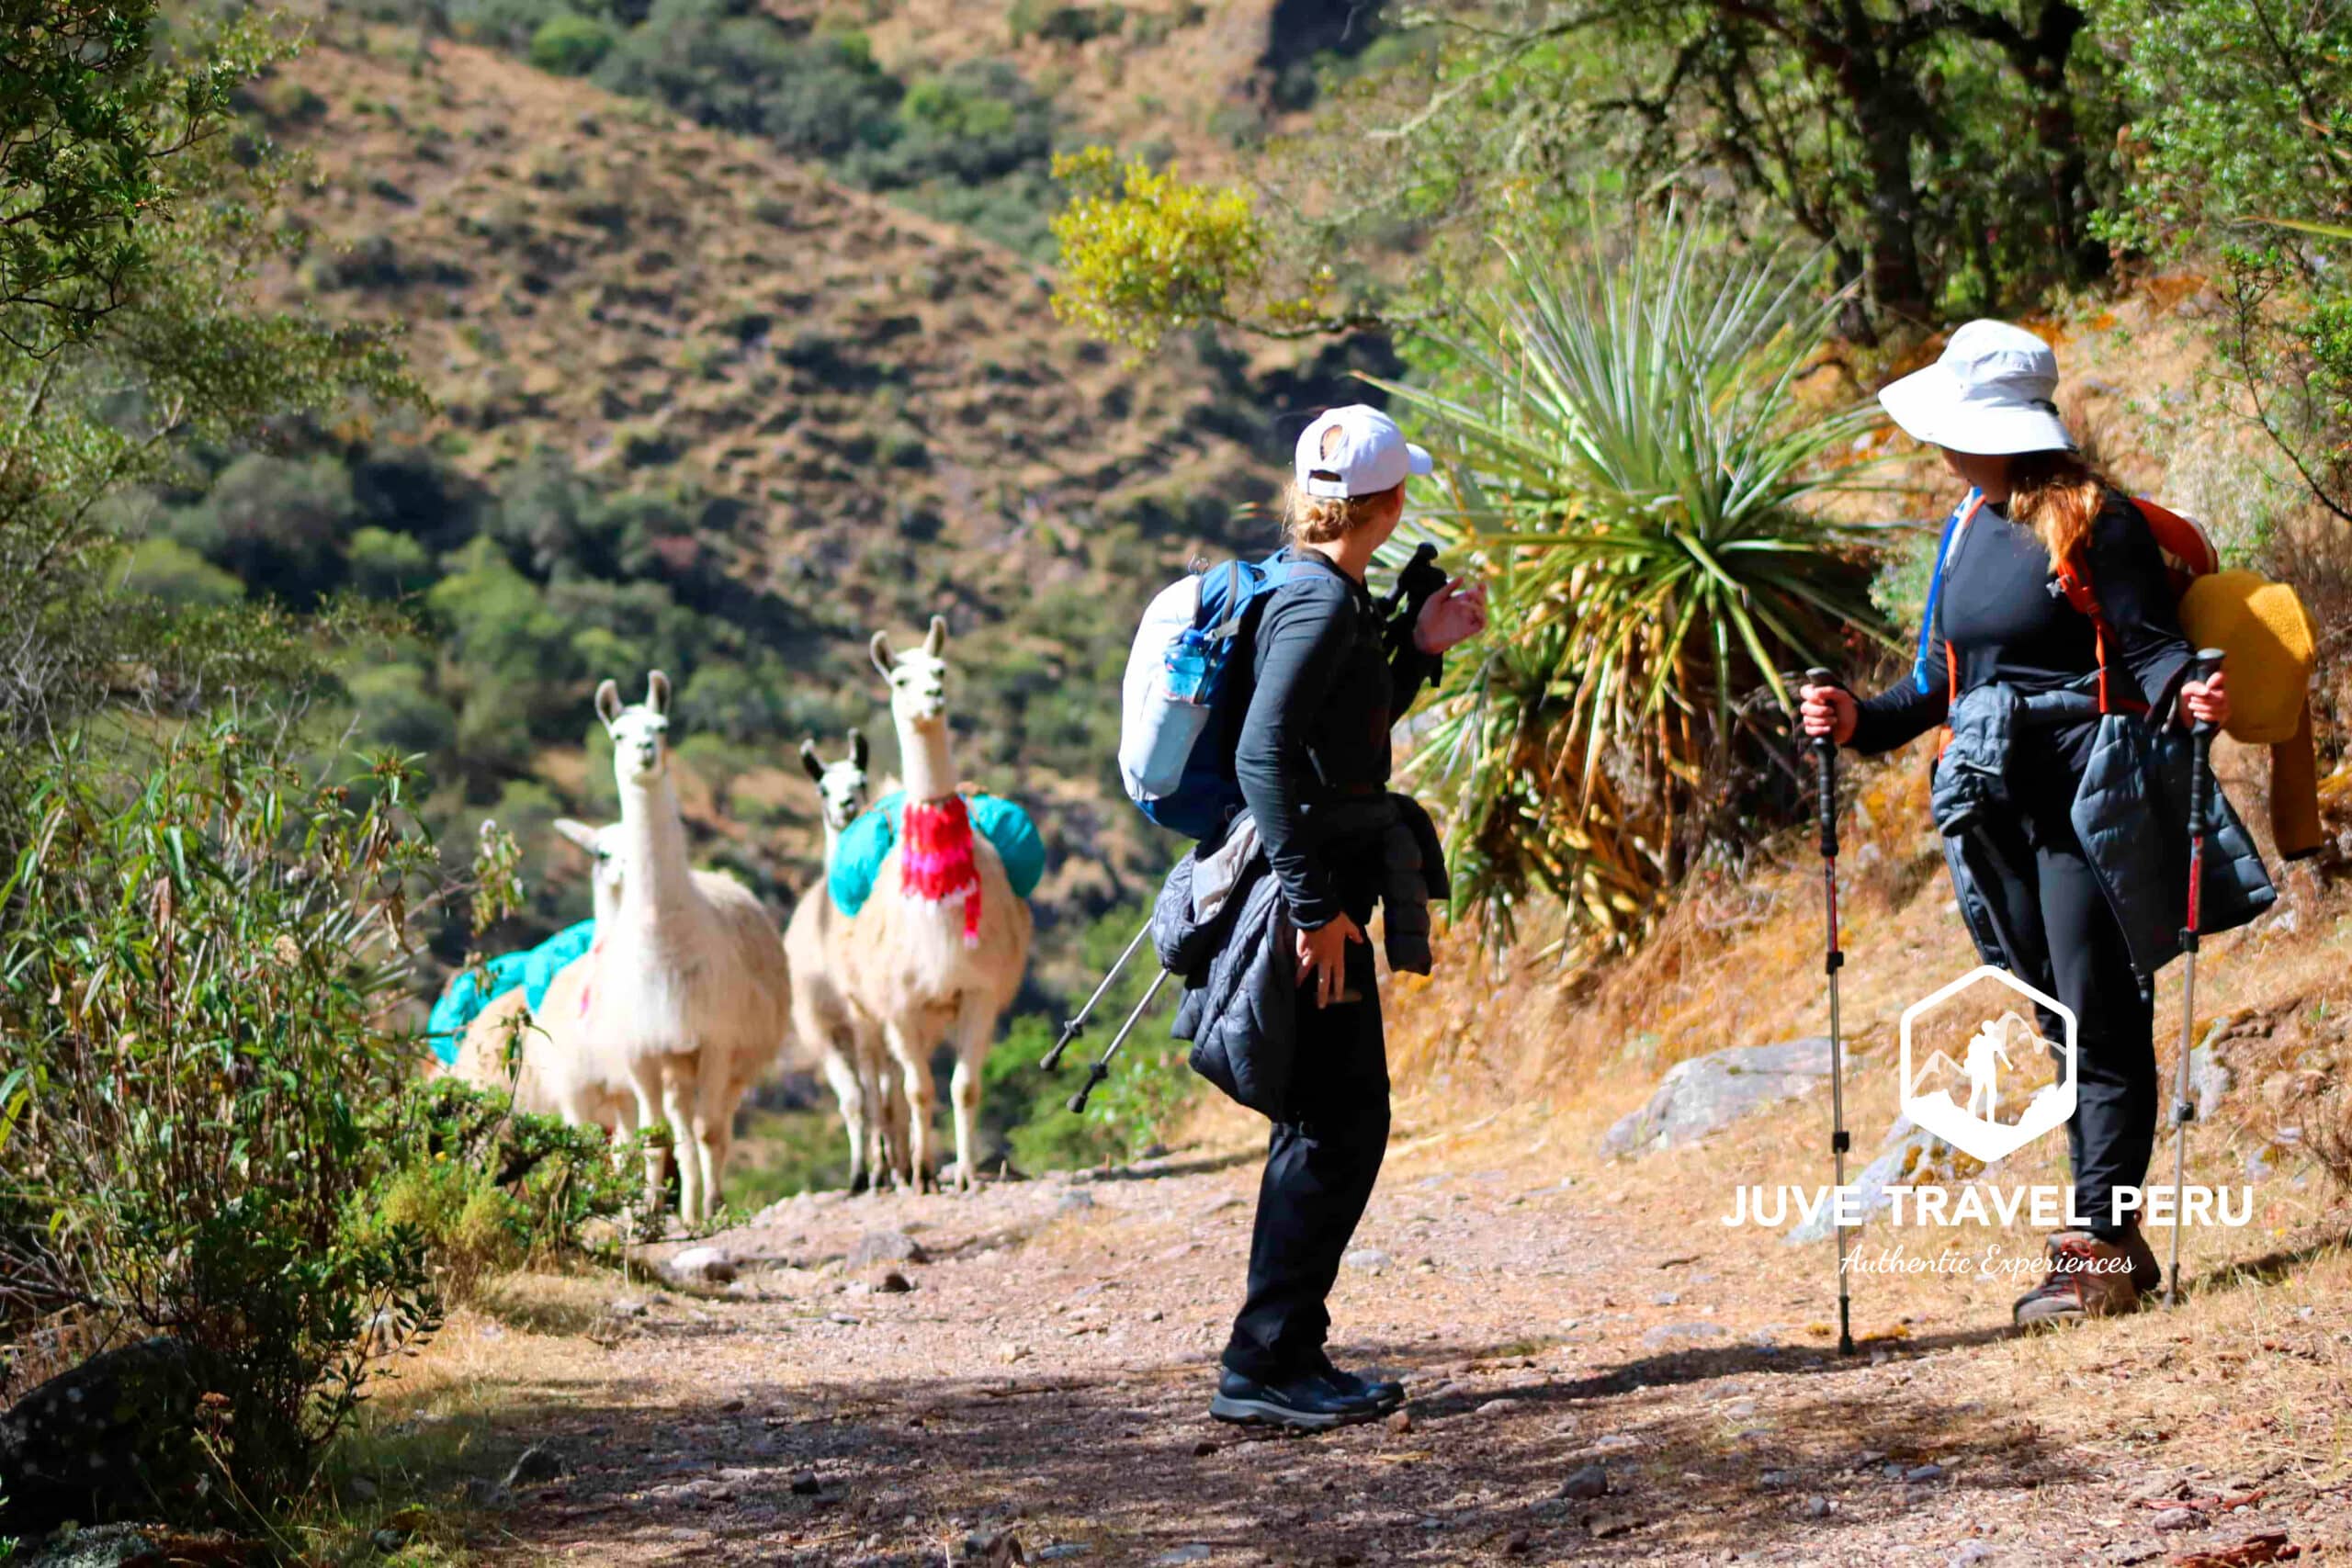 Trekking with Llamas: Lares + 1-Day Inca Trail to Machu Picchu (4 Days)